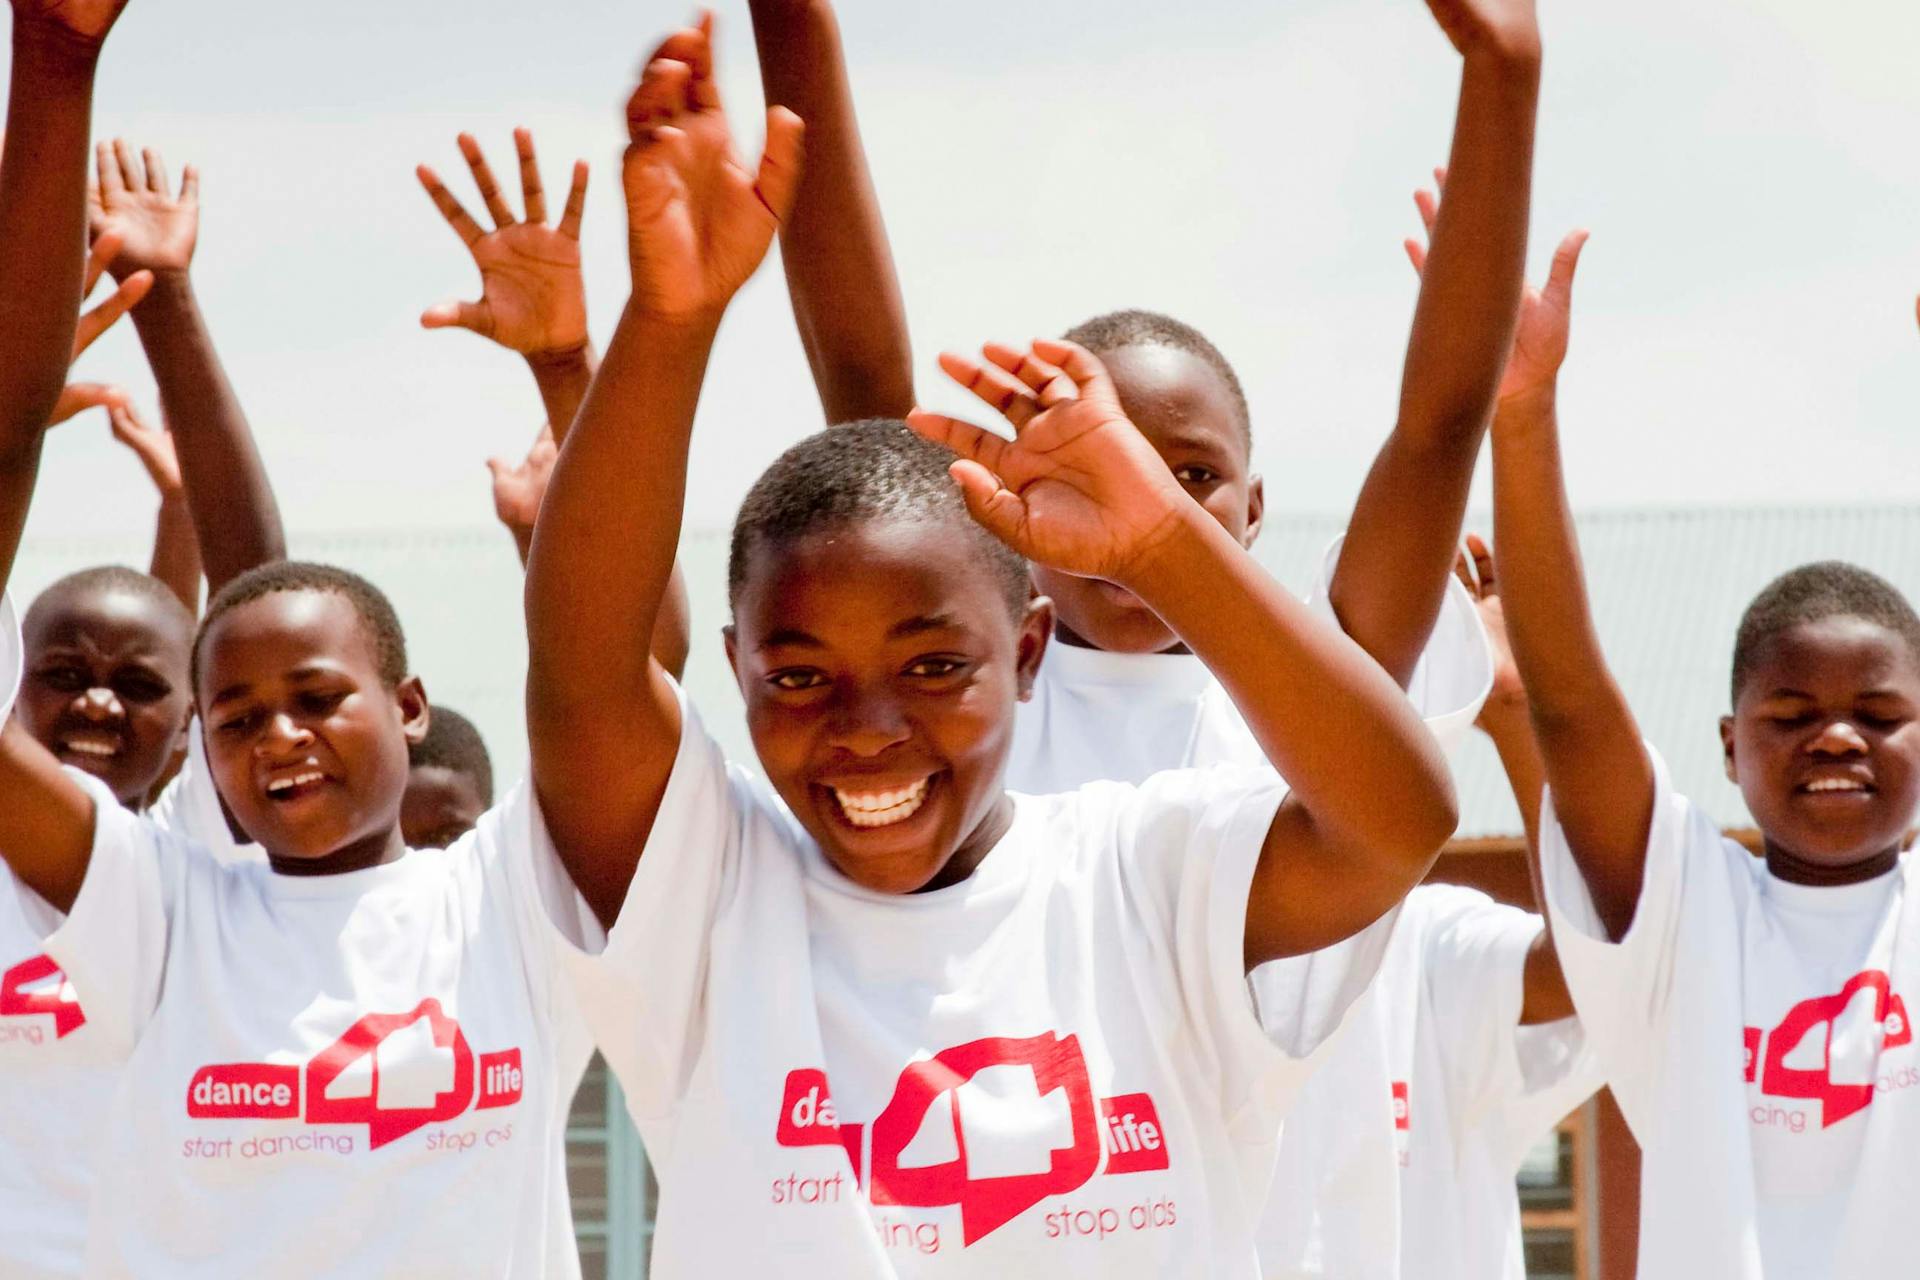 Children smiling and dancing wearing Dance4Life t-shirts